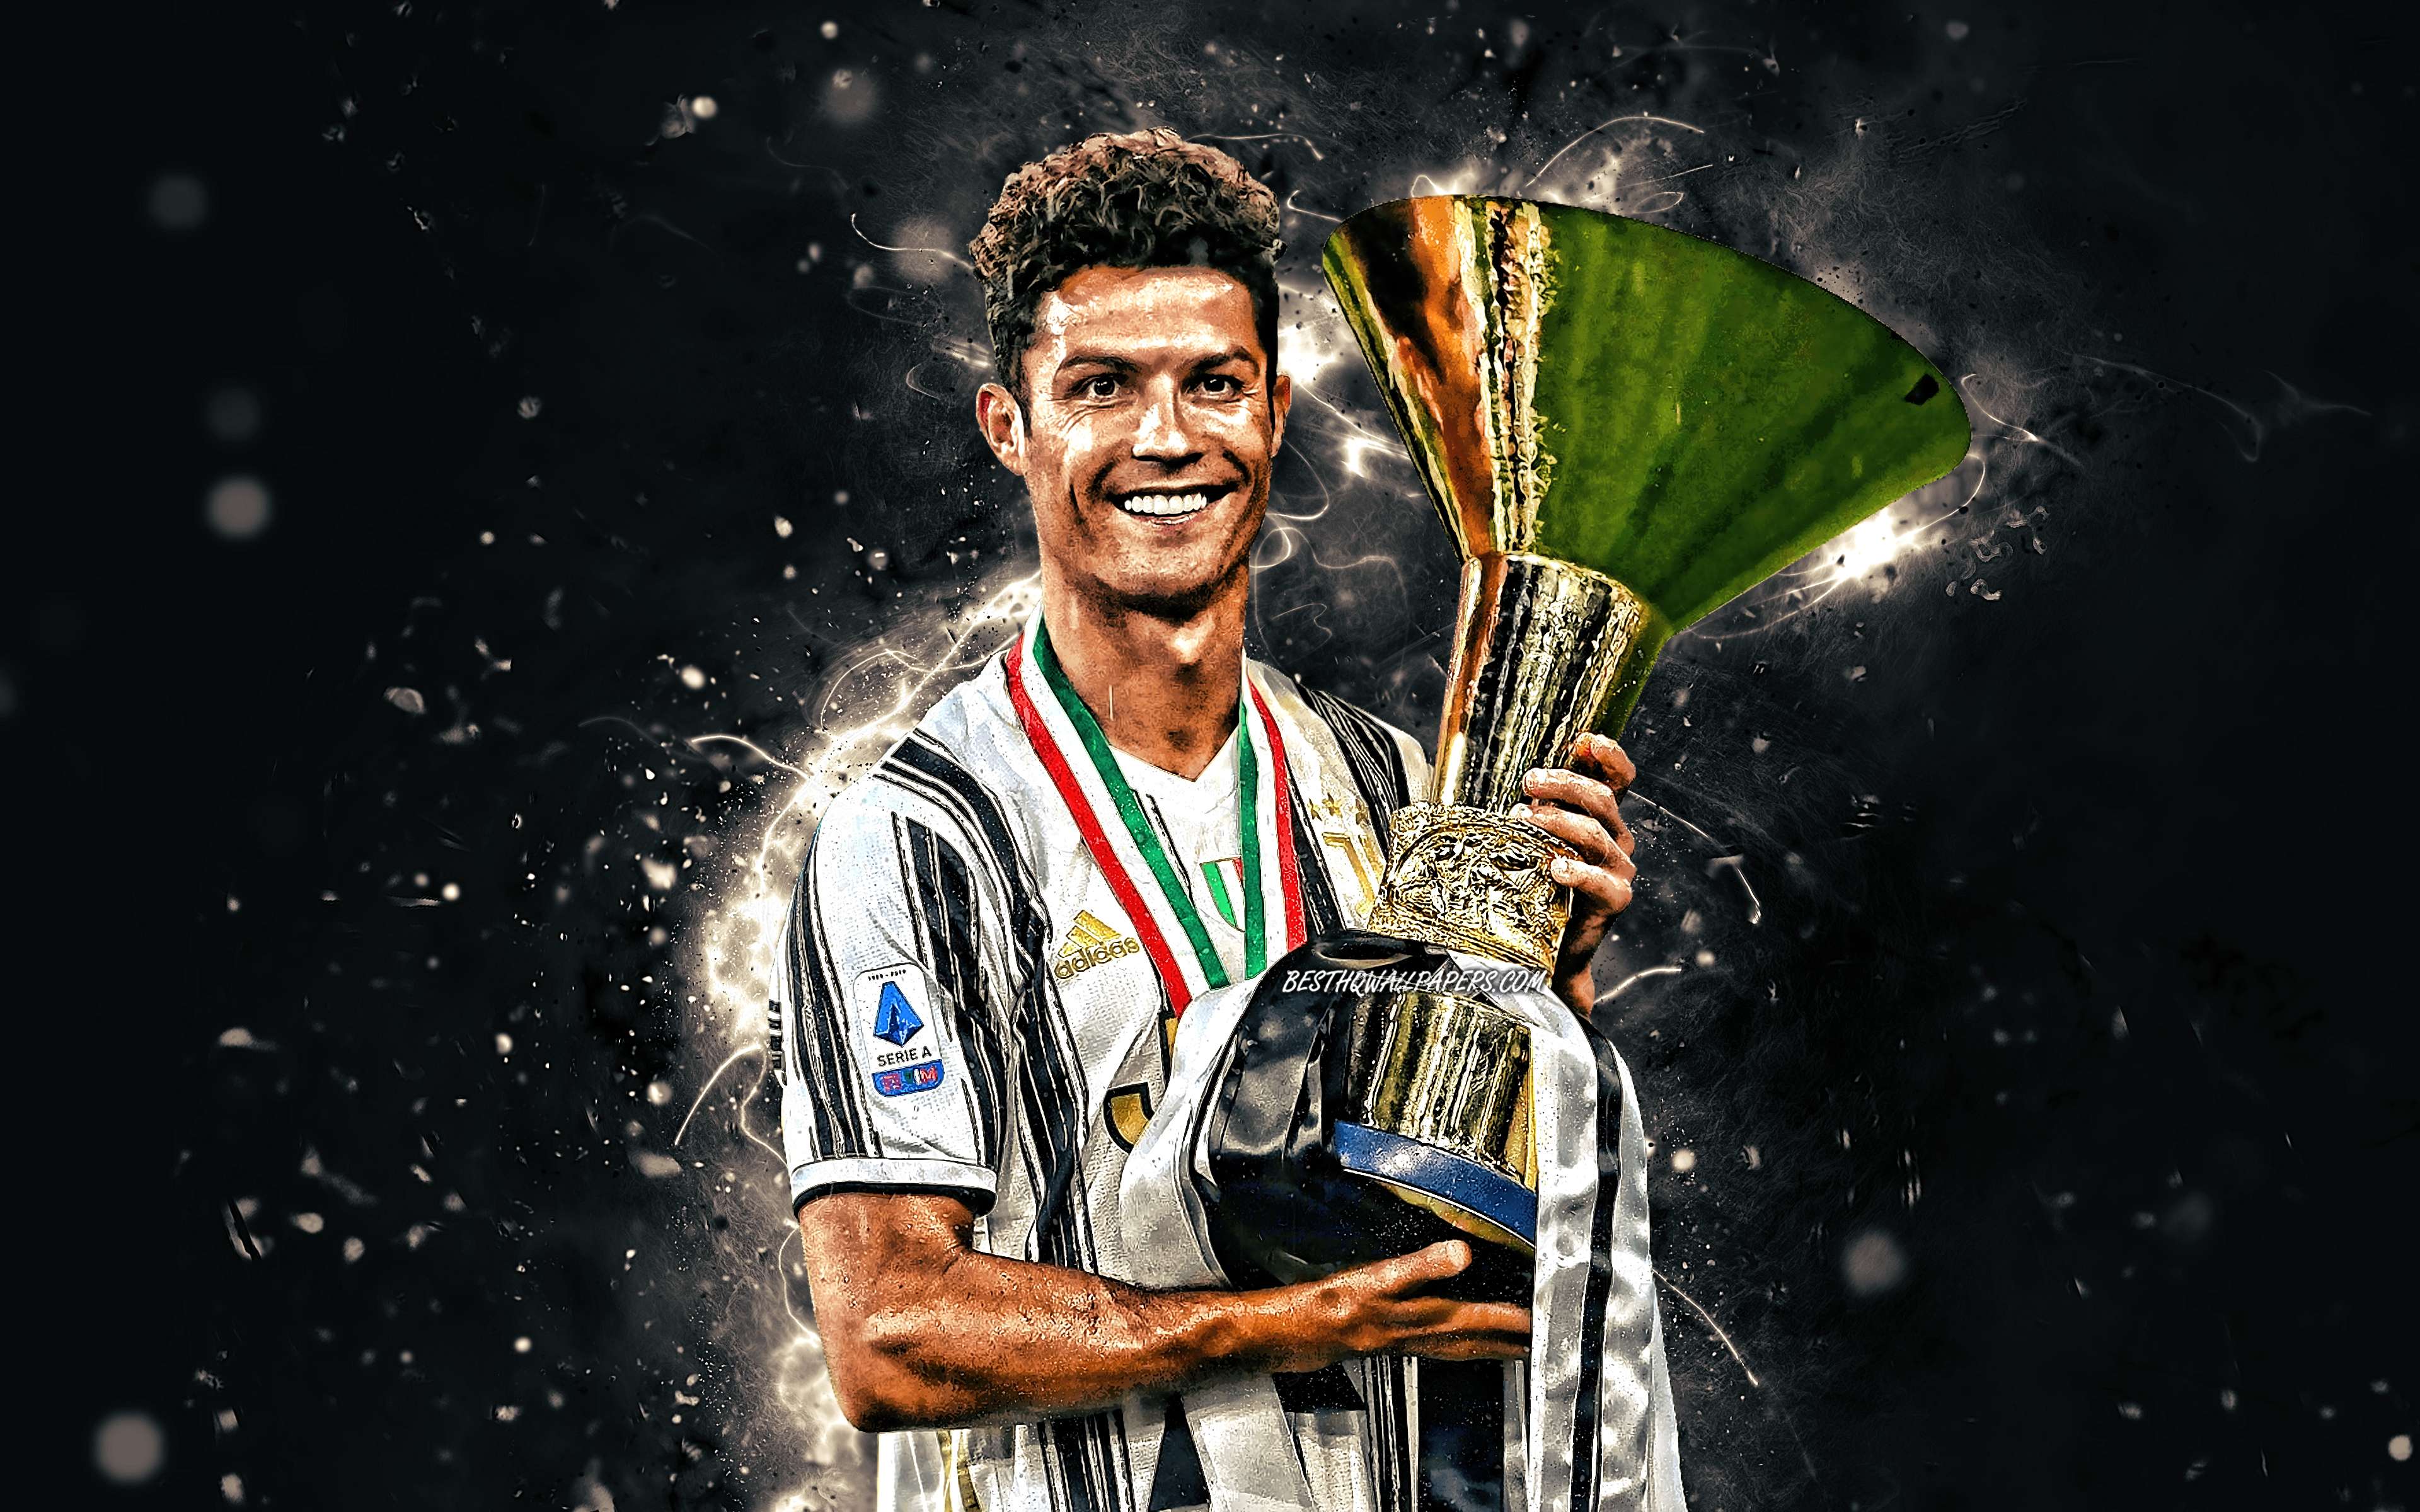 Juventus Fc Cr7 Wallpaper 4k Download Imagens Cristiano Ronaldo 4k